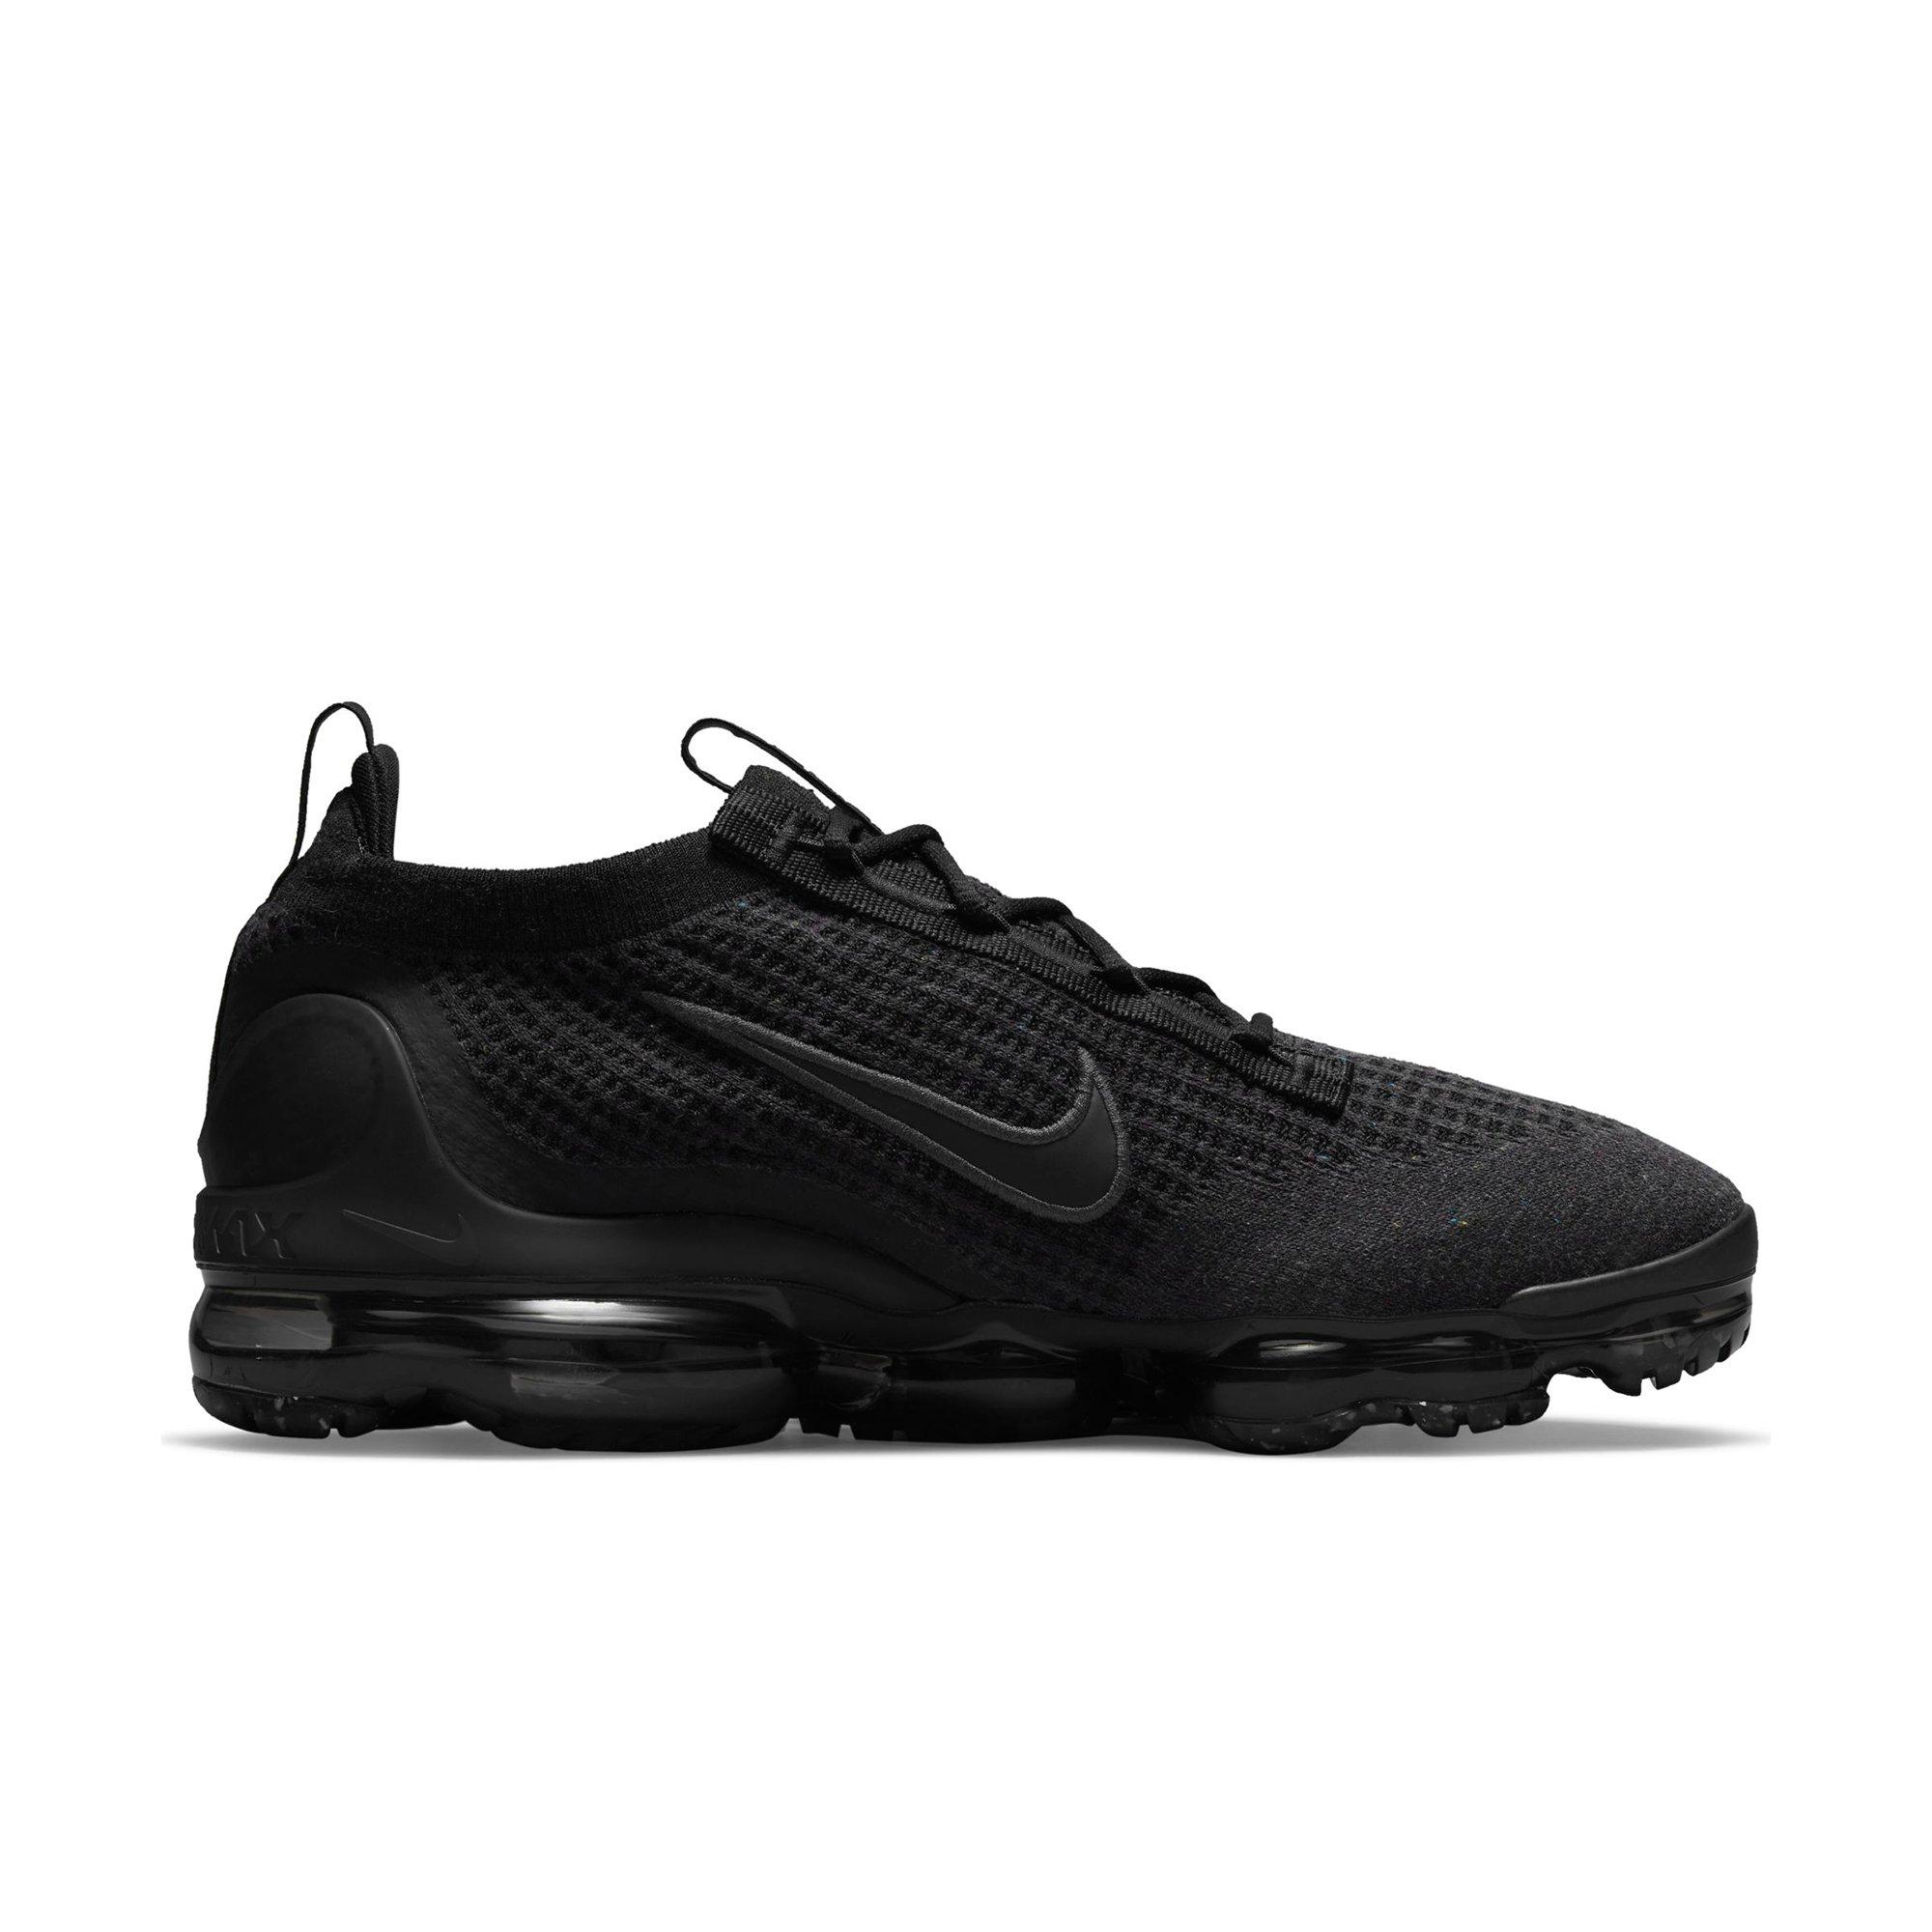 Nike Air Vapormax 2021 "Black/Anthracite" Men's Shoe